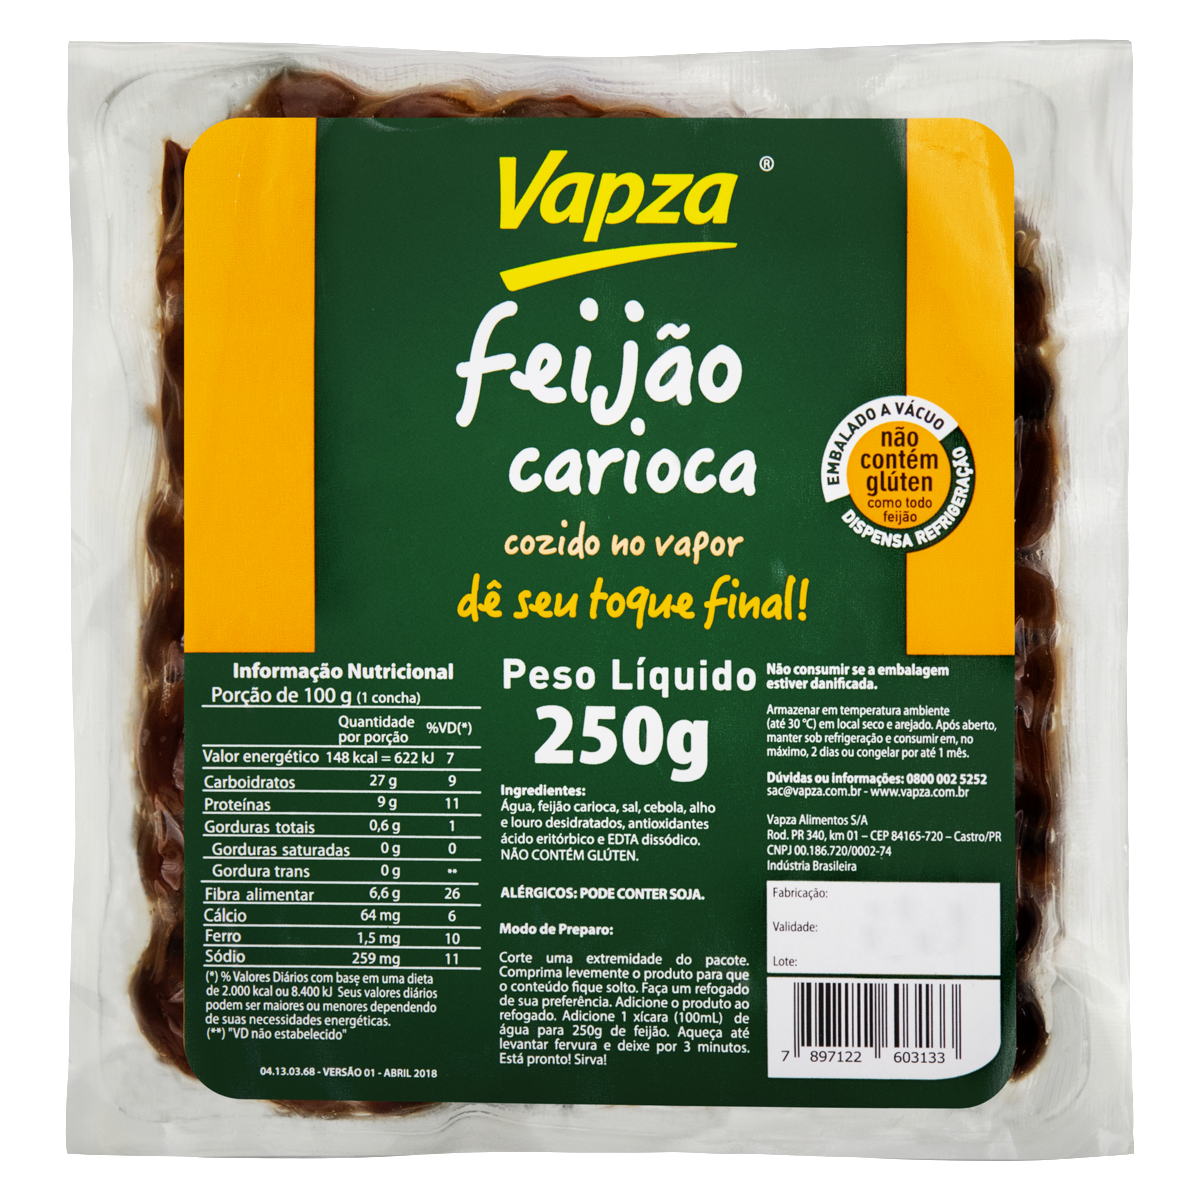 Feijão Preto Tipo 1 Kicaldo 1kg  Mambo Supermercado São Paulo